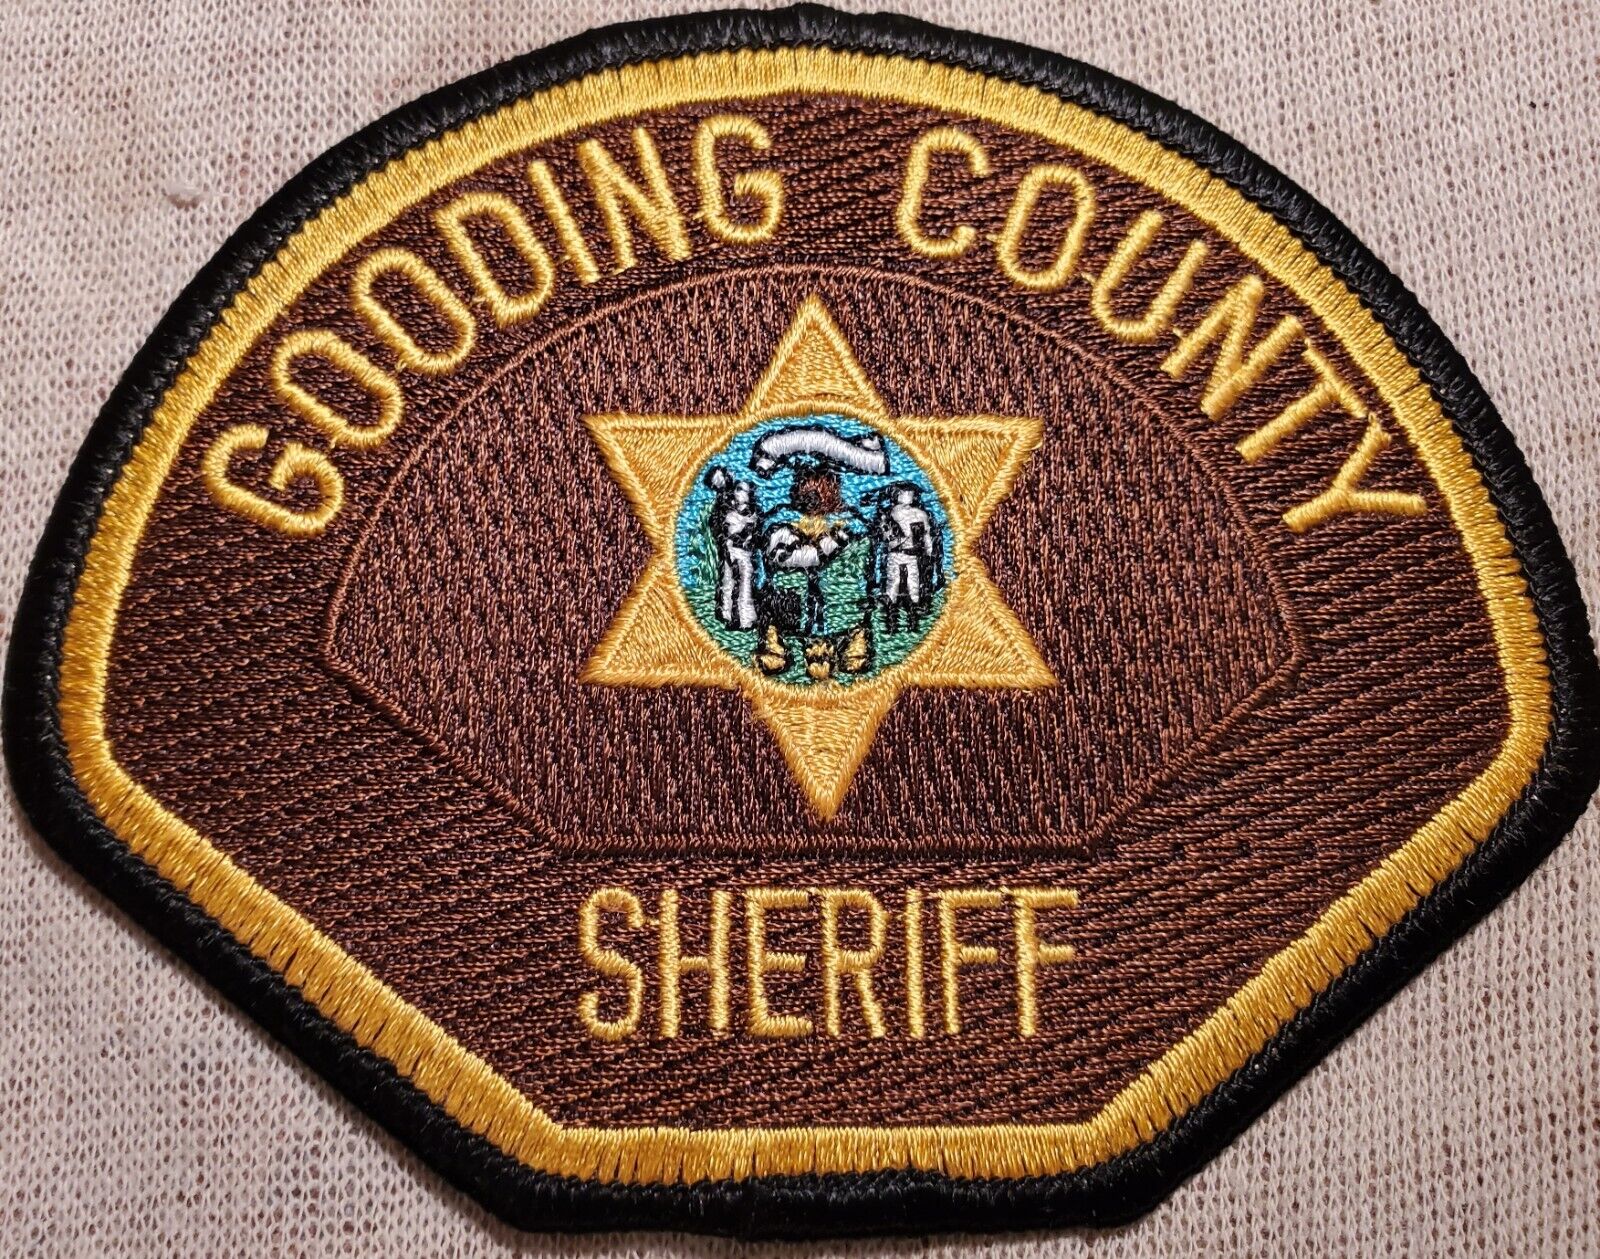 ID Gooding County Idaho Sheriff Shoulder Patch